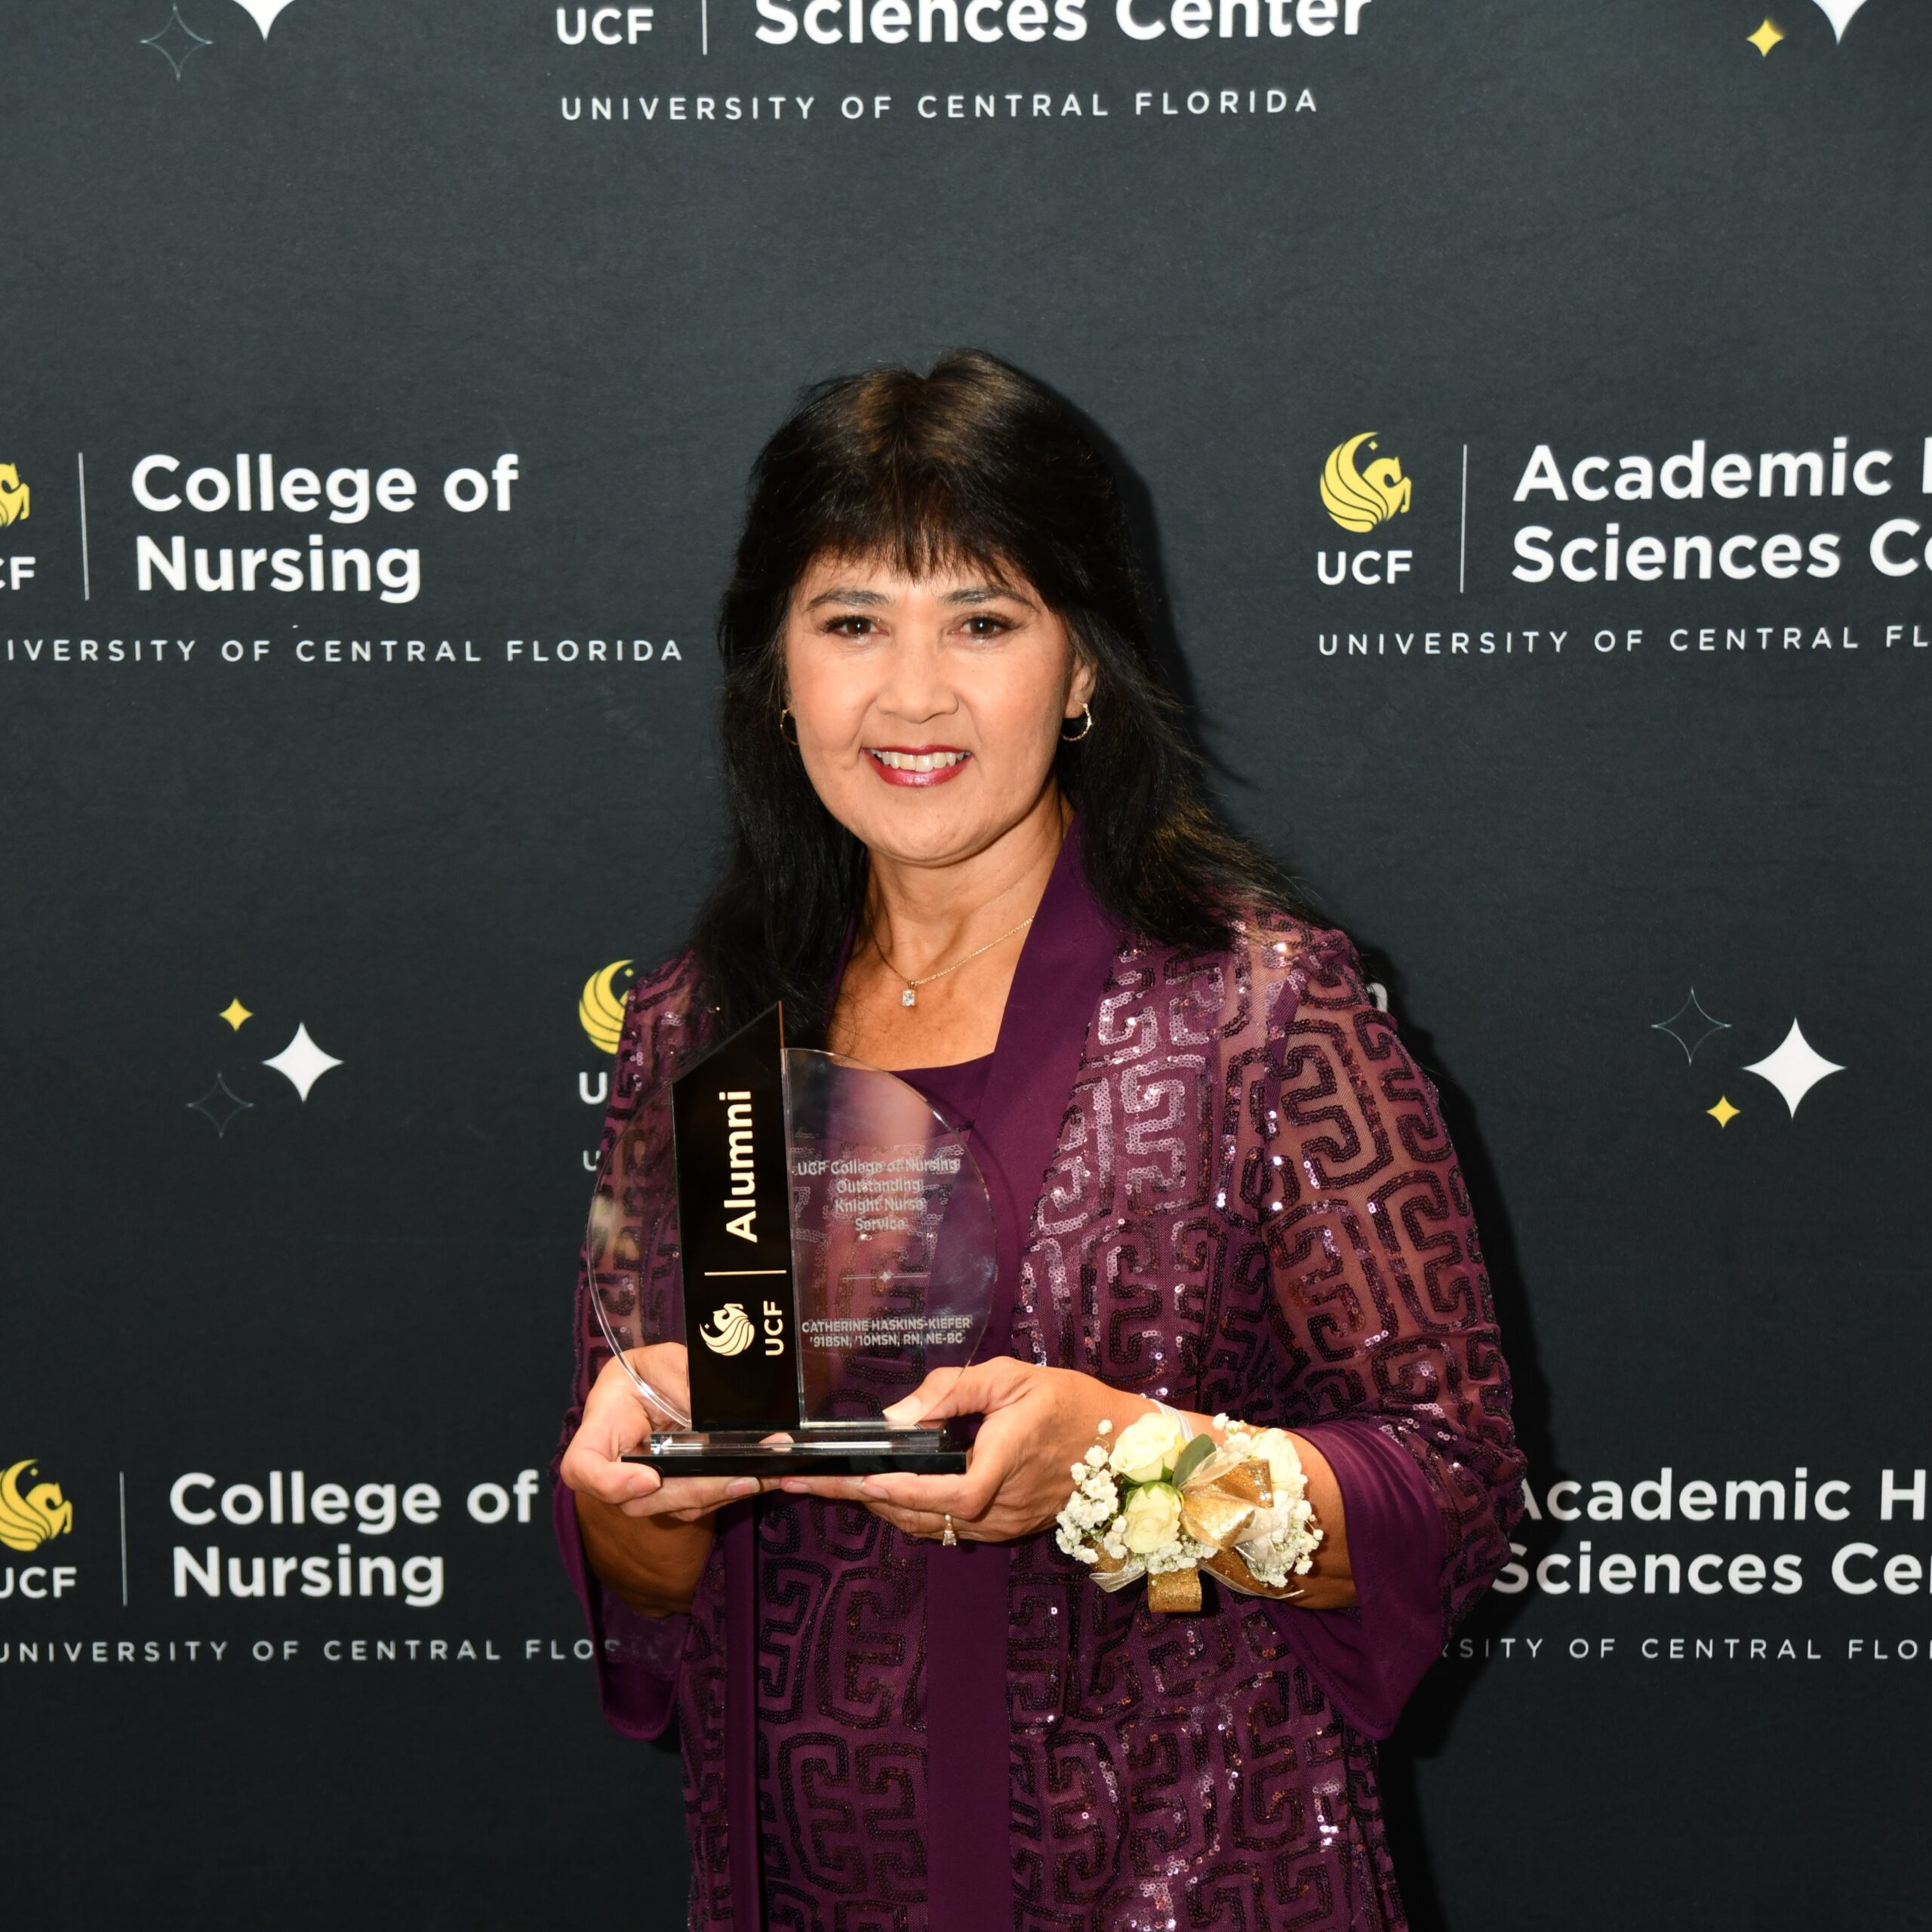 Catherine Haskins-Kiefer holding a crystal UCF Alumni award in front of a UCF College of Nursing banner